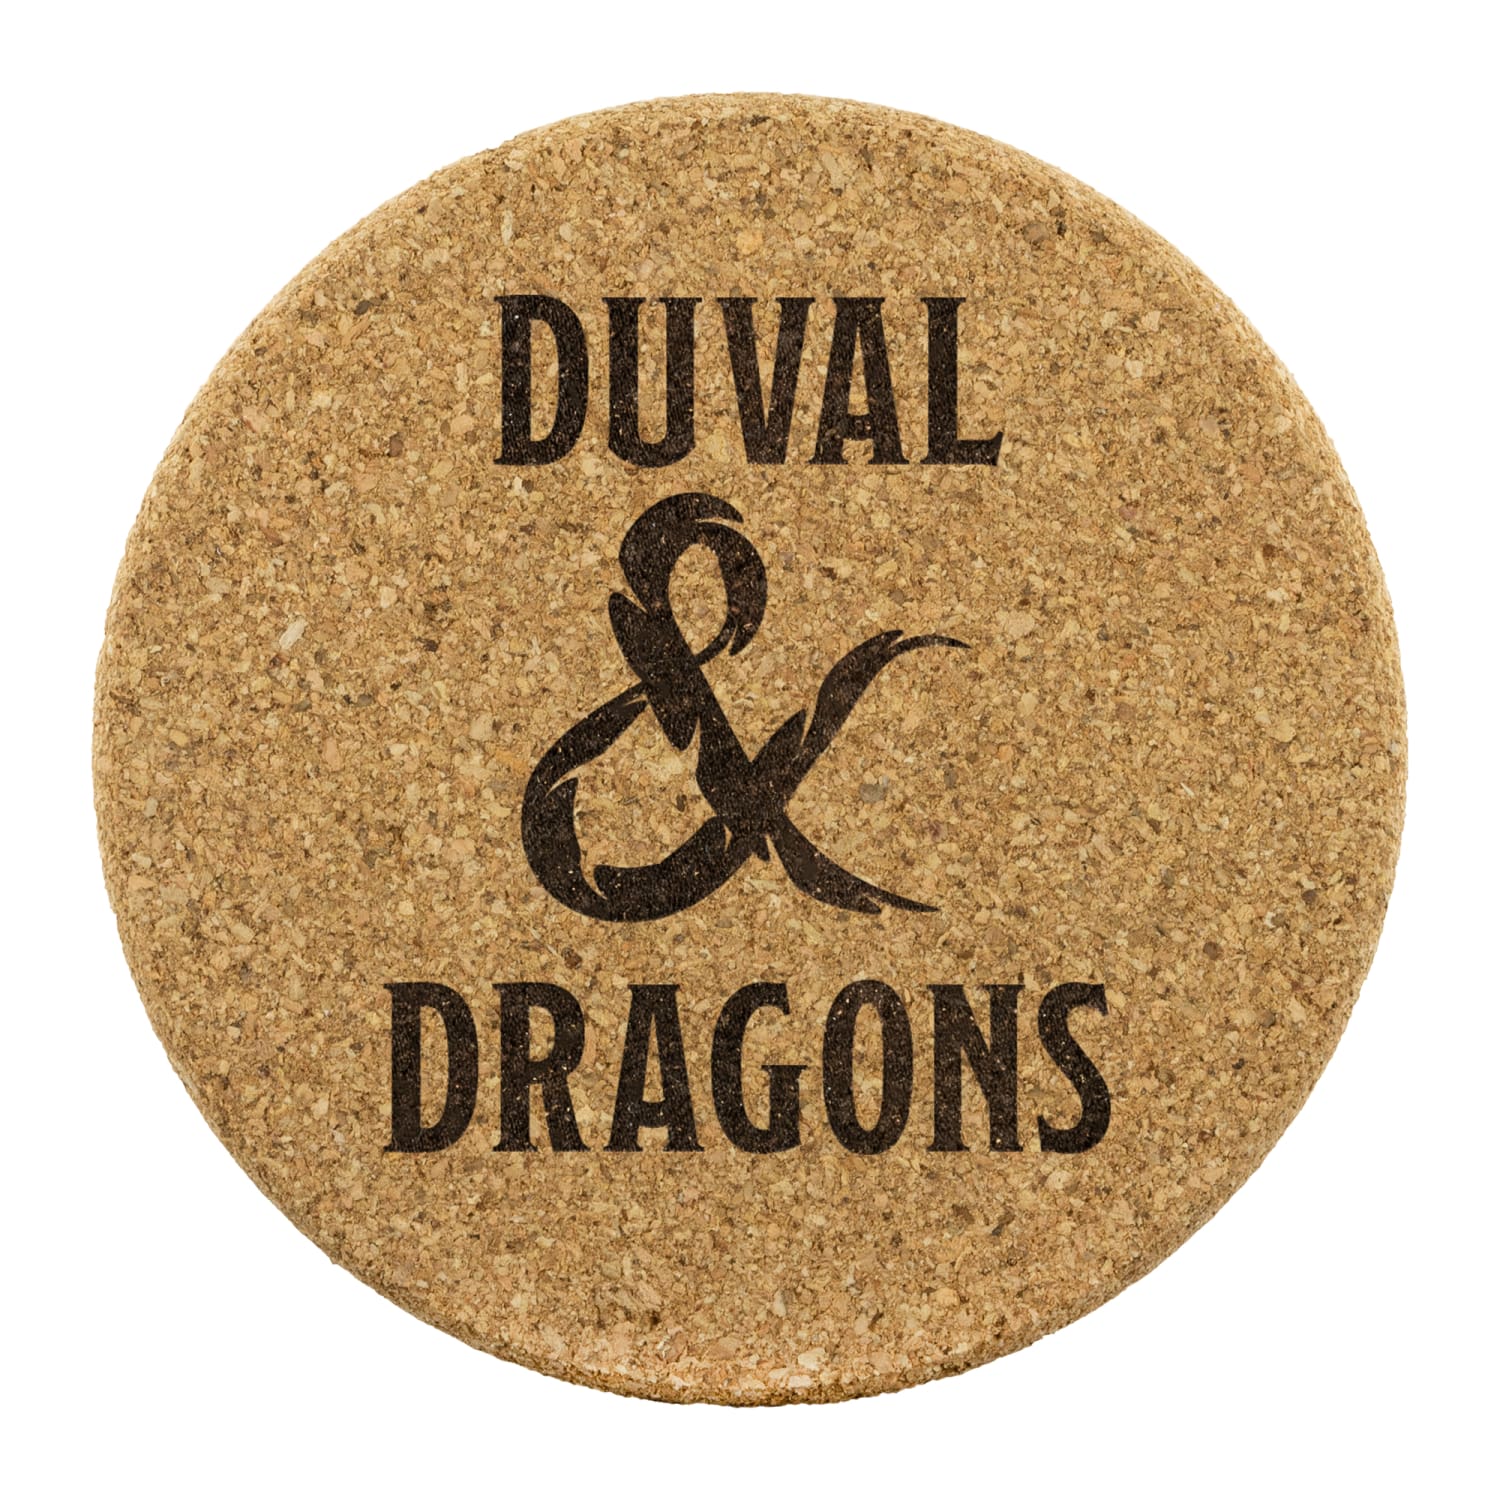 Duval & Dragons Logo Round Cork Coaster Set of 4 - Round Cork Coaster - 4pc - Coasters